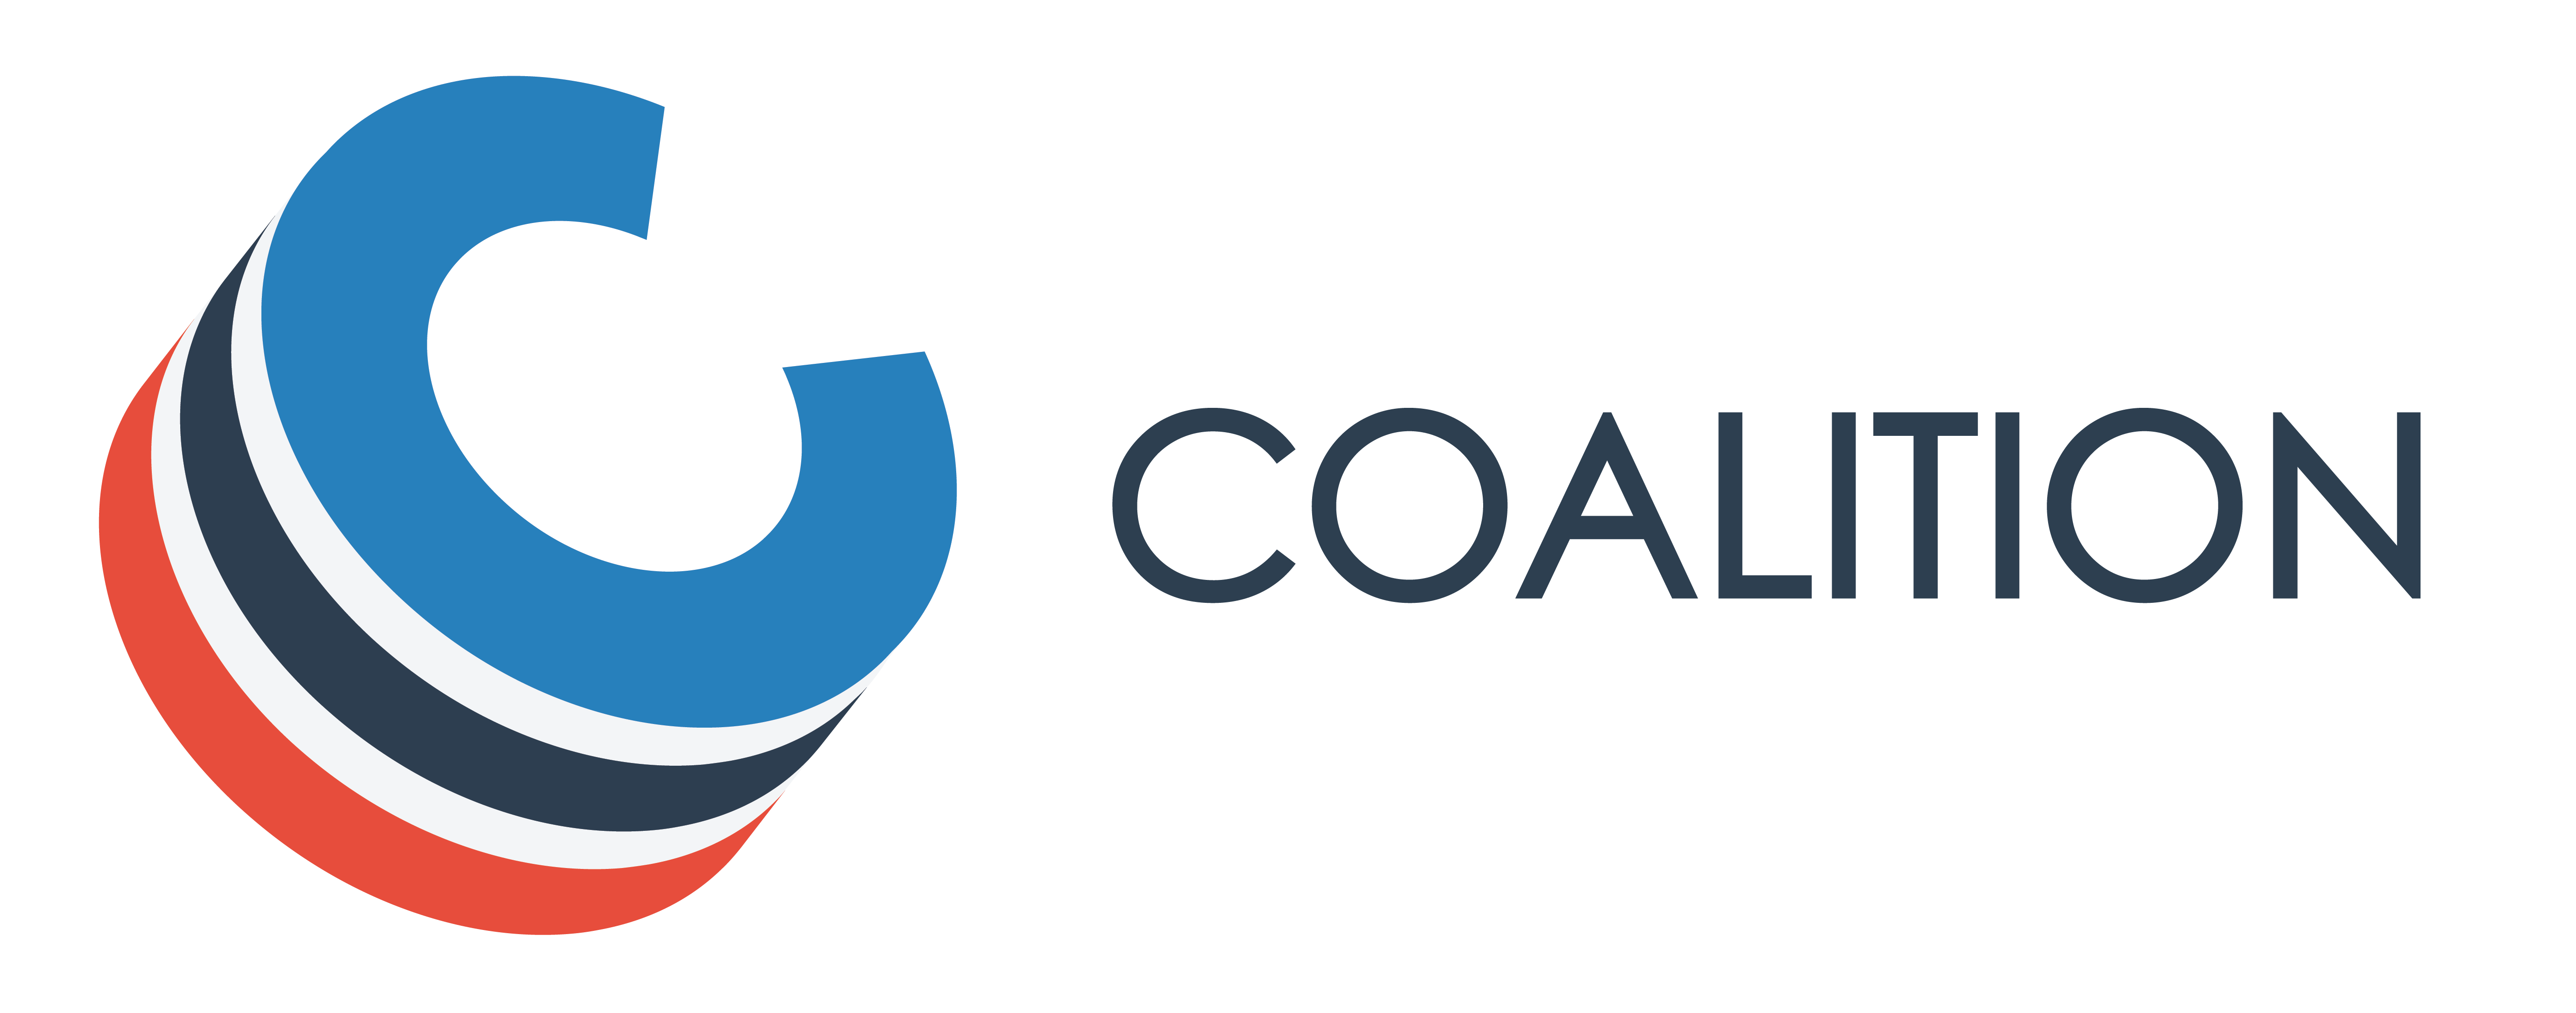 Coalition Logo - Coalition Logo Simple Horz Color 01